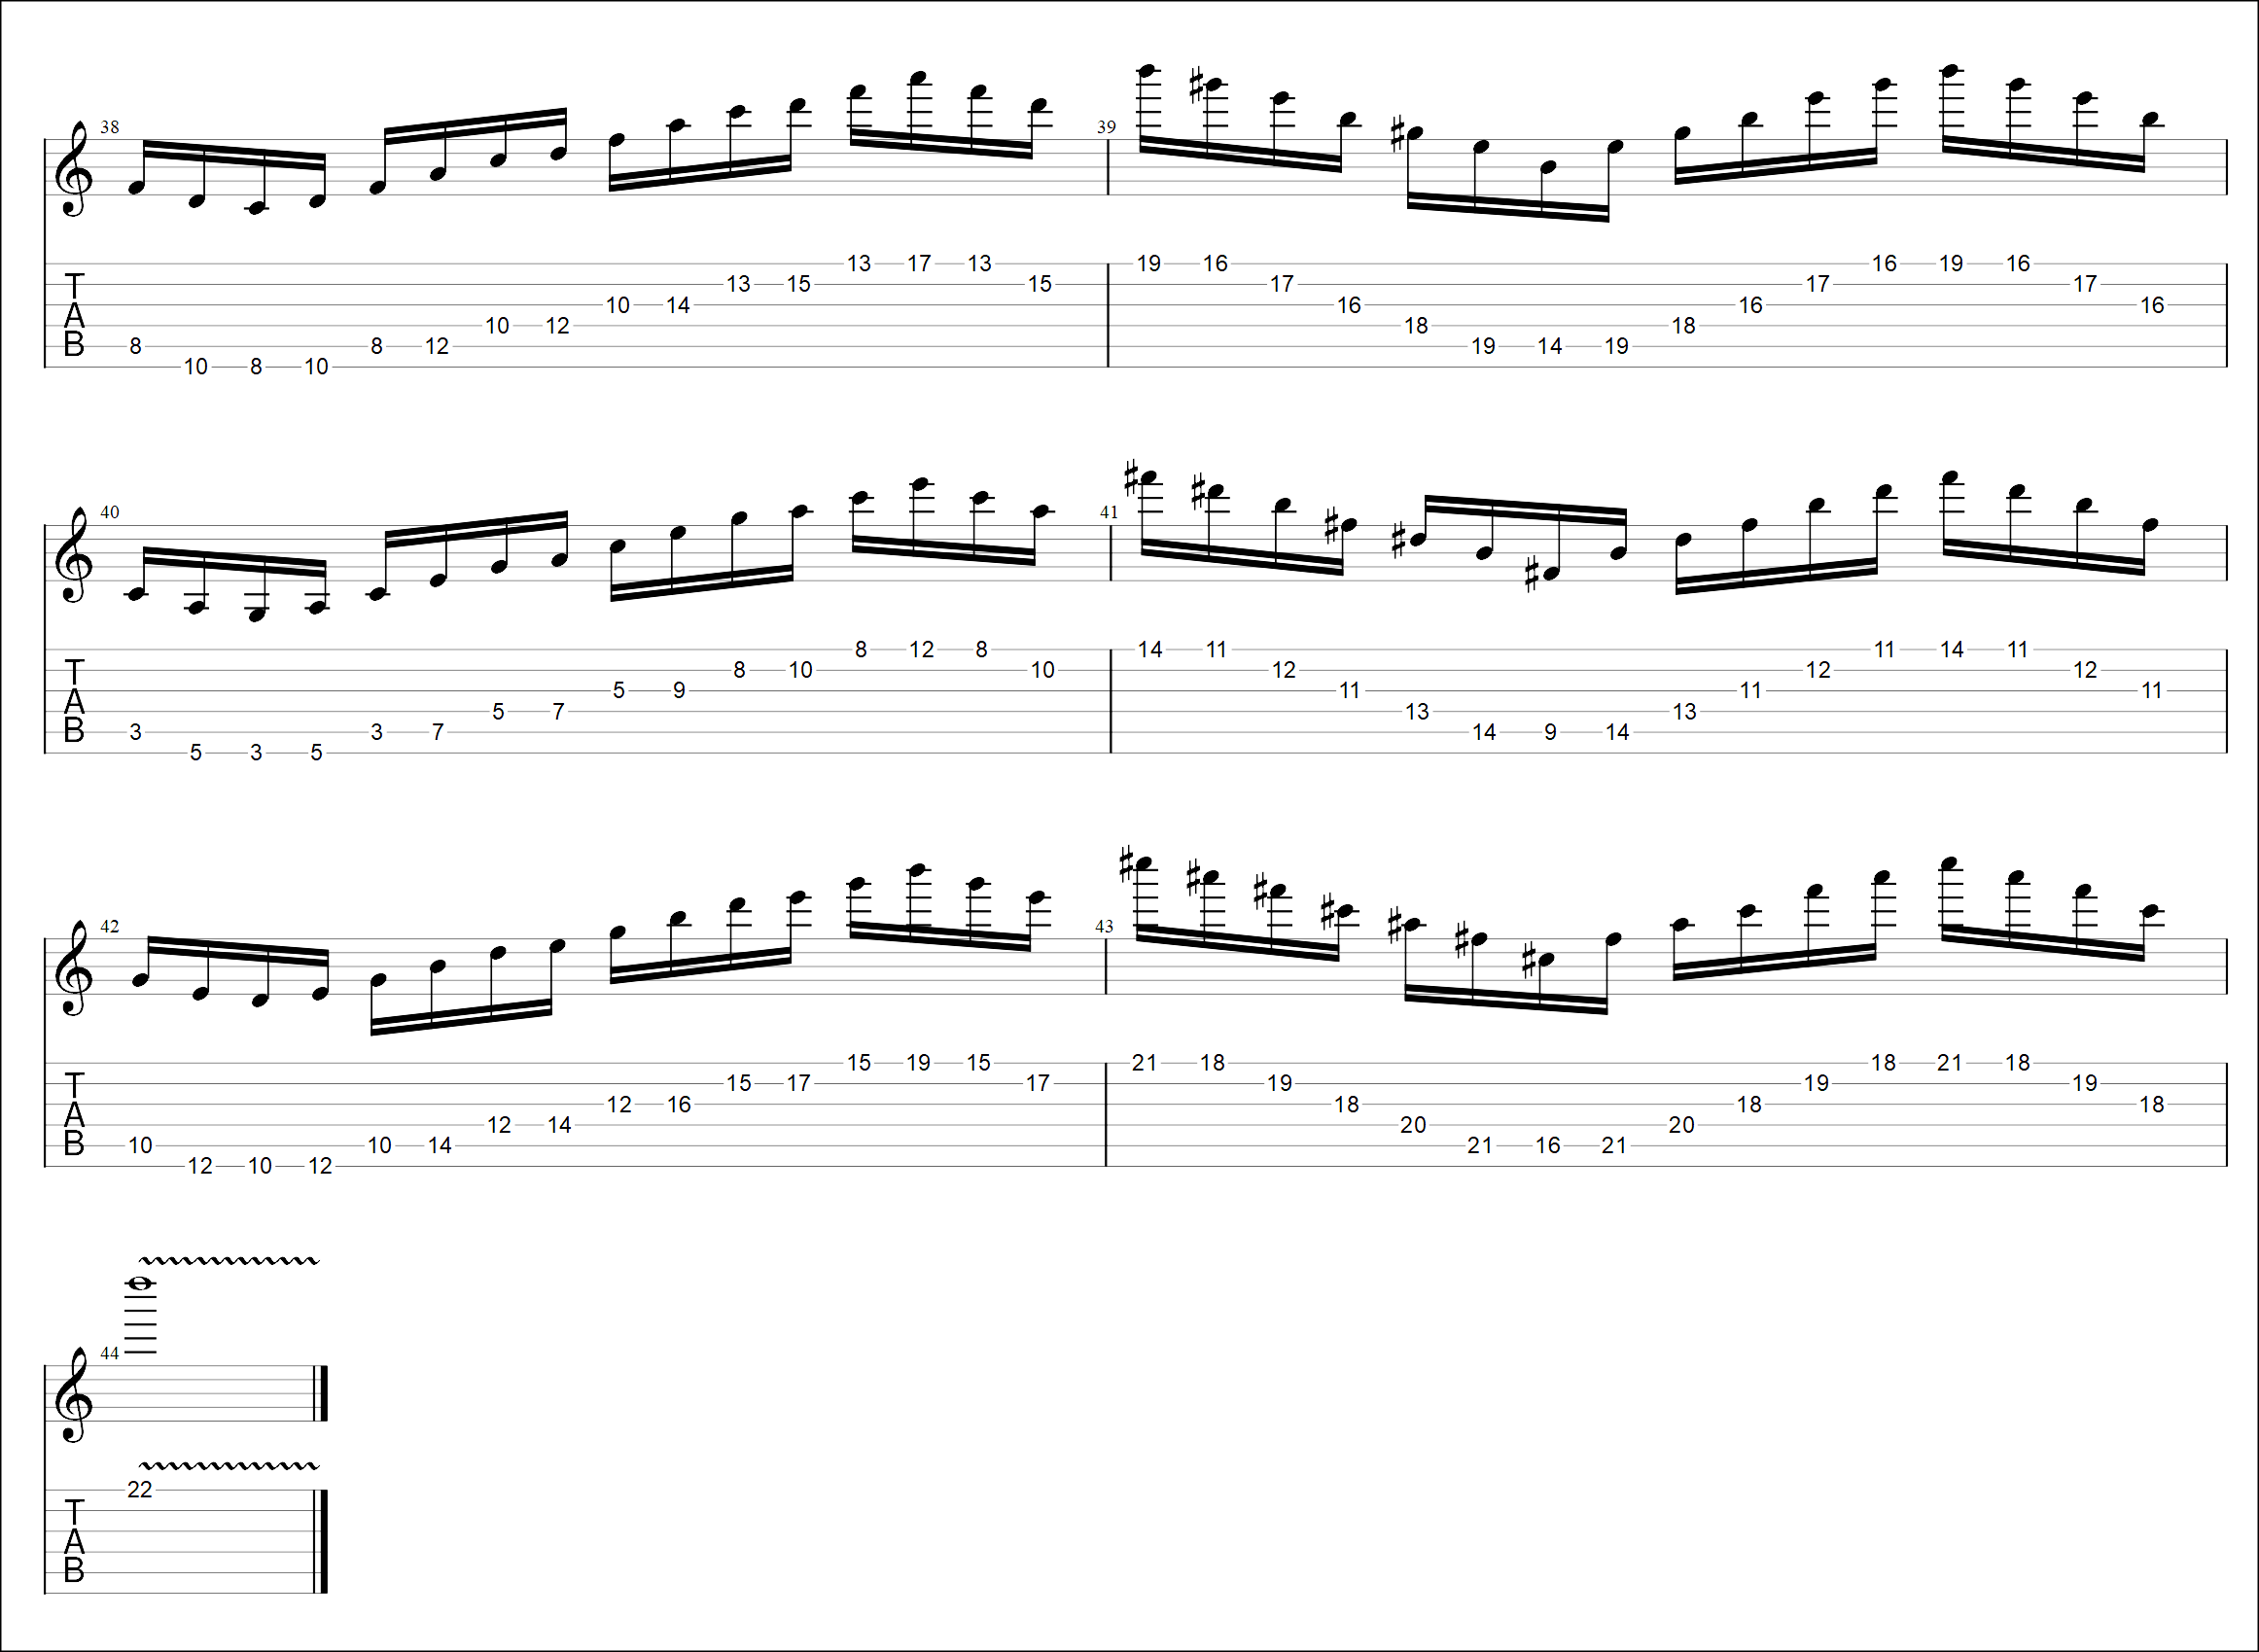 【TAB】In The Dragon's Den / Symphony X Guitar Solo Slow Practice Michael Romeo シンフォニーX マイケルロメオ イン･ザ･ドラゴン デン ピッキング基礎練習ゆっくり【Guitar Picking Vol.65】